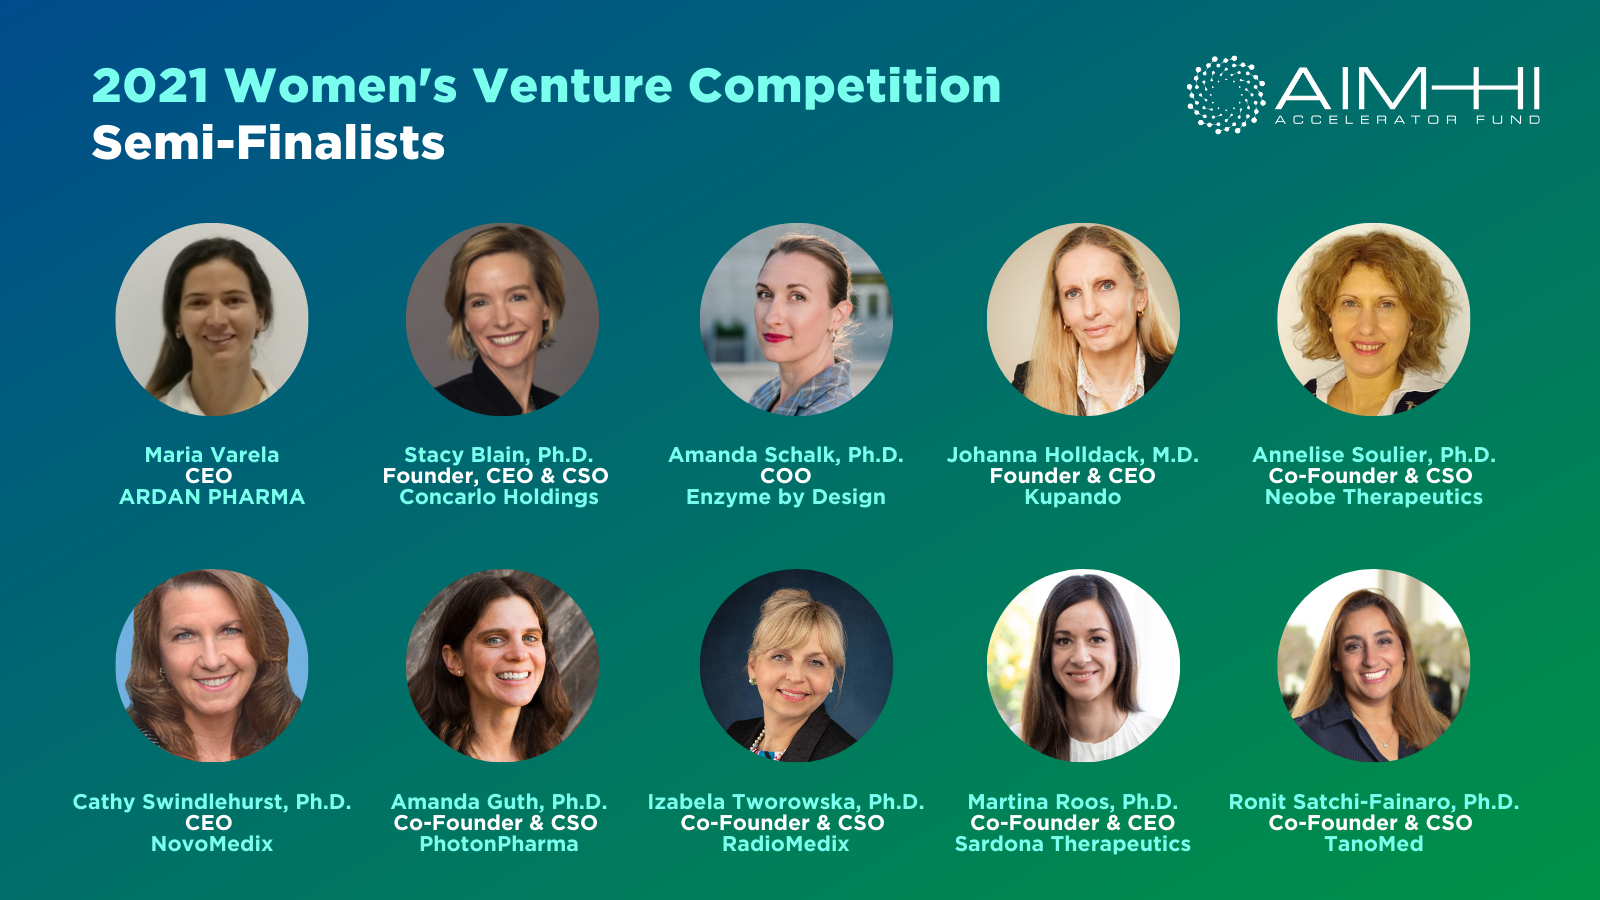 2021 Women's Venture Competition Announced Semi-Finalists!